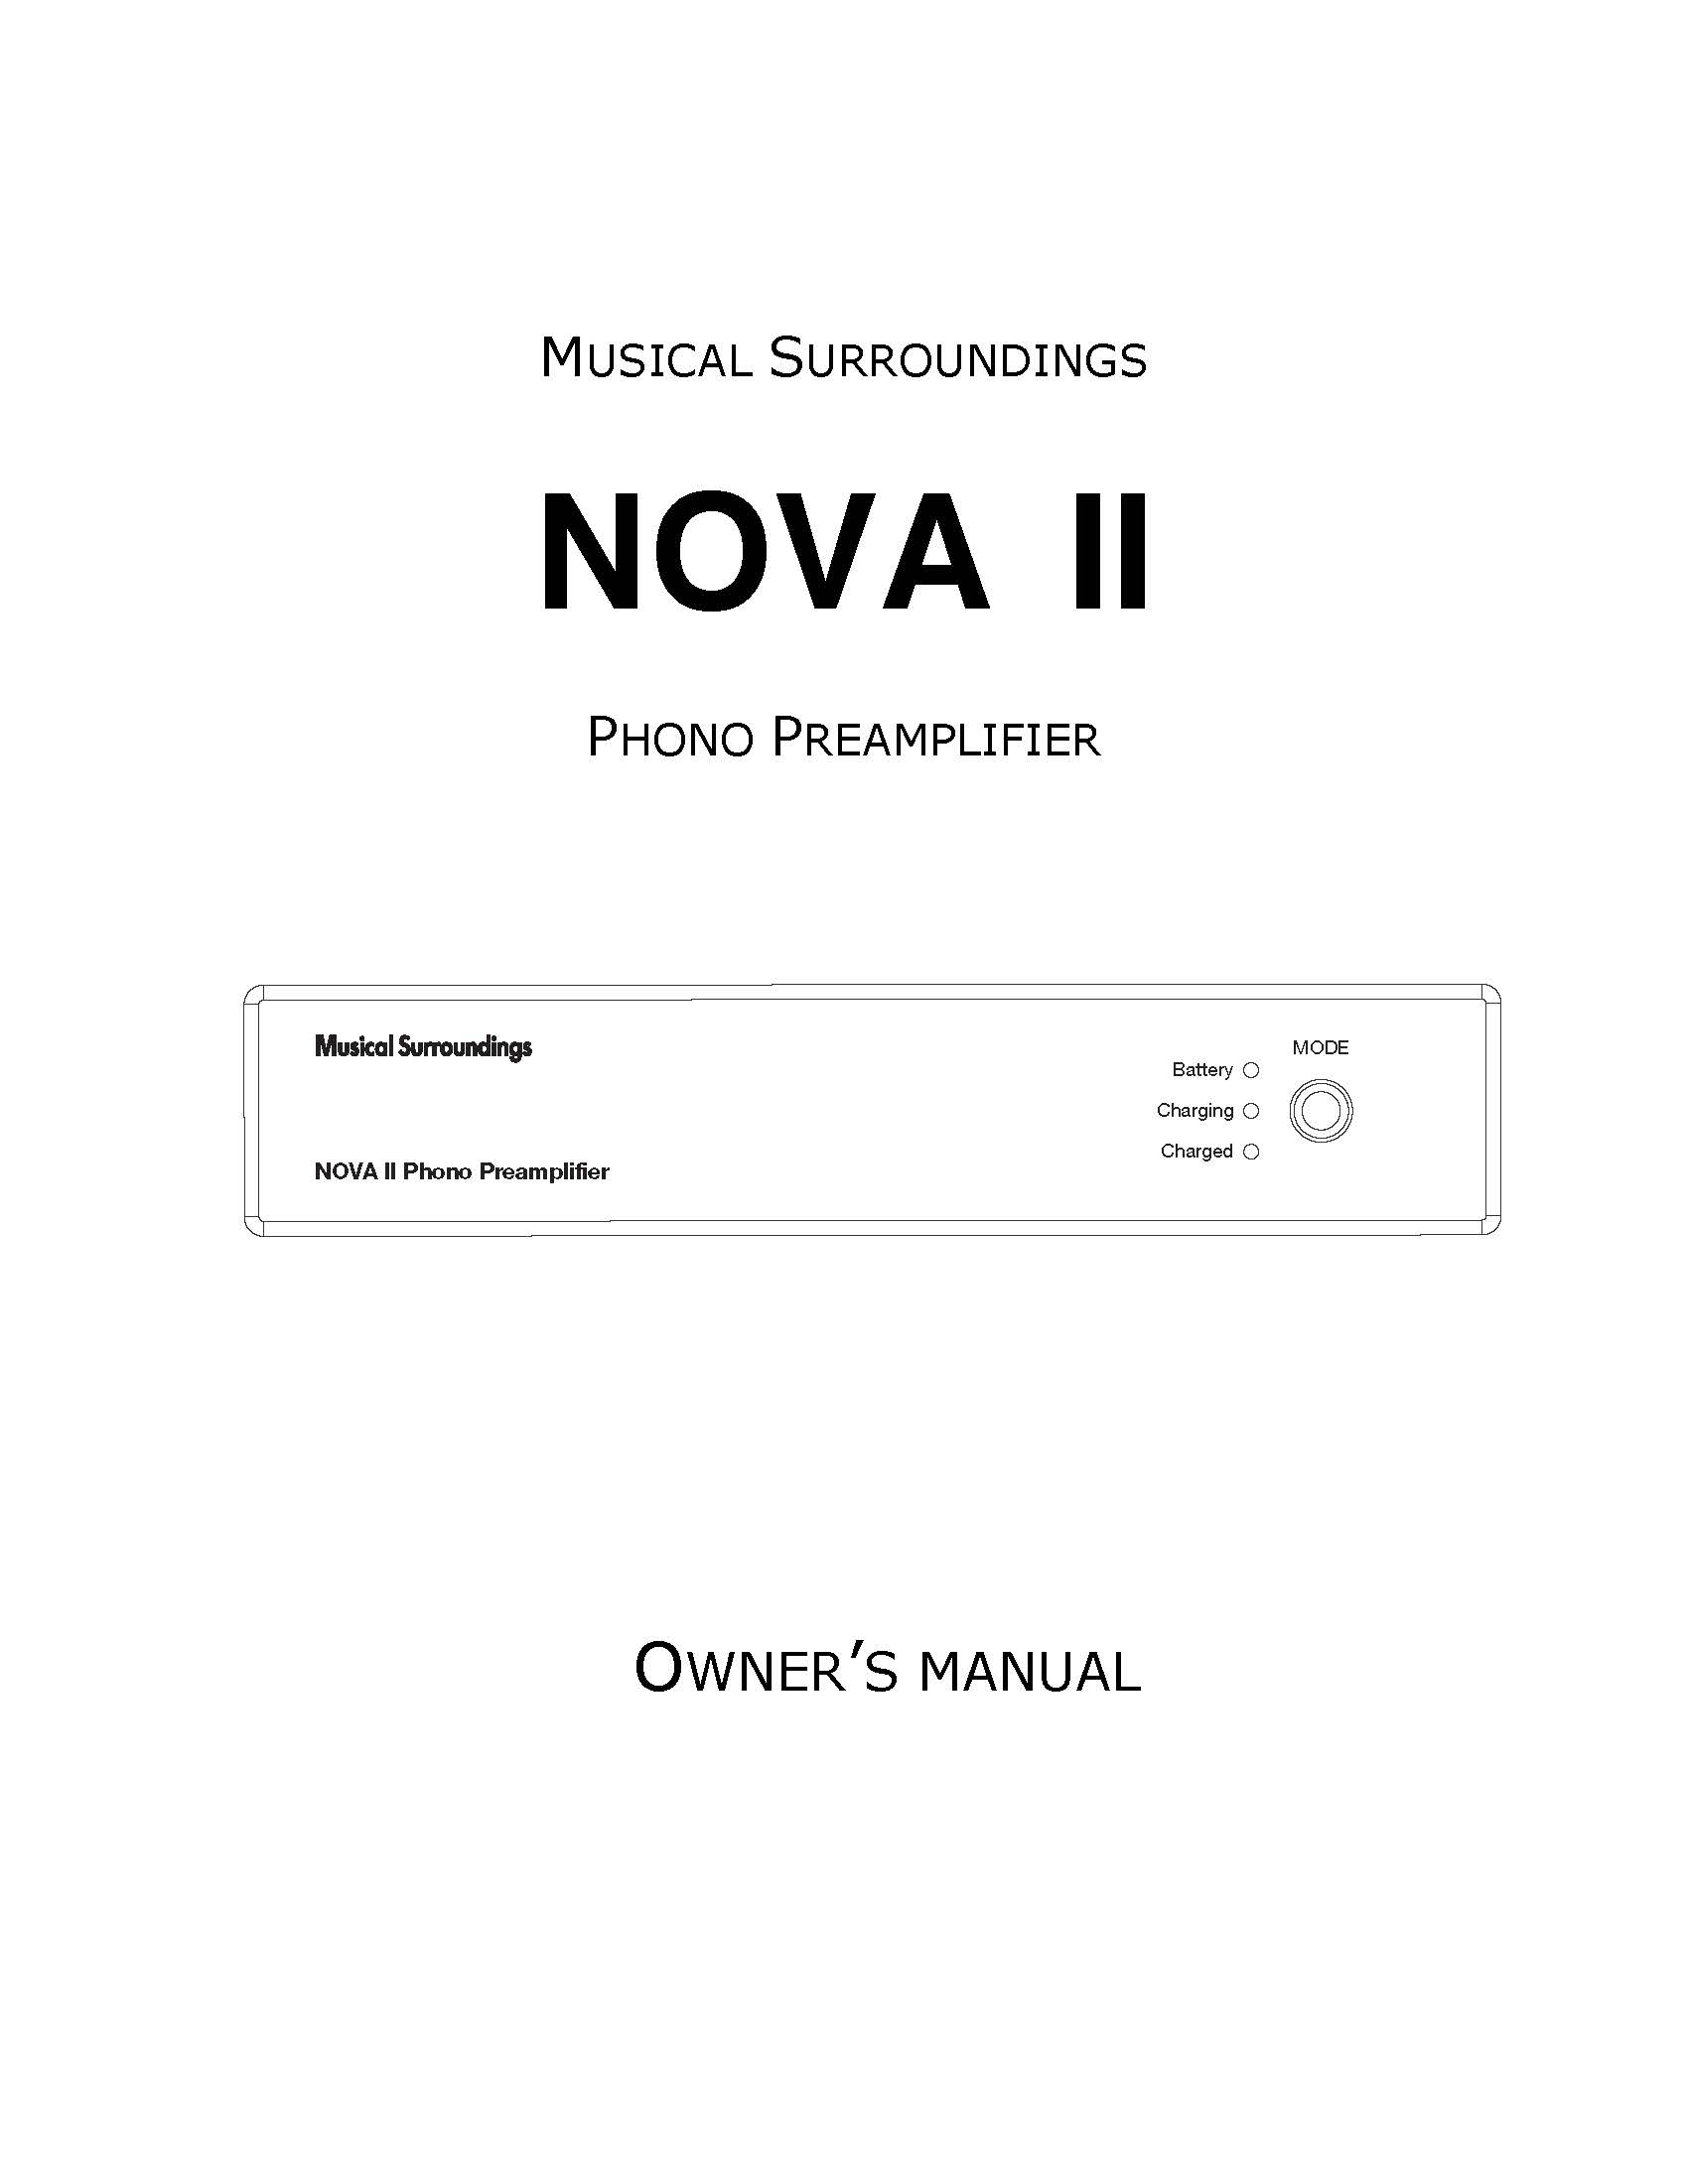 Musical Surroundings Nova II User Manual - Norman Audio